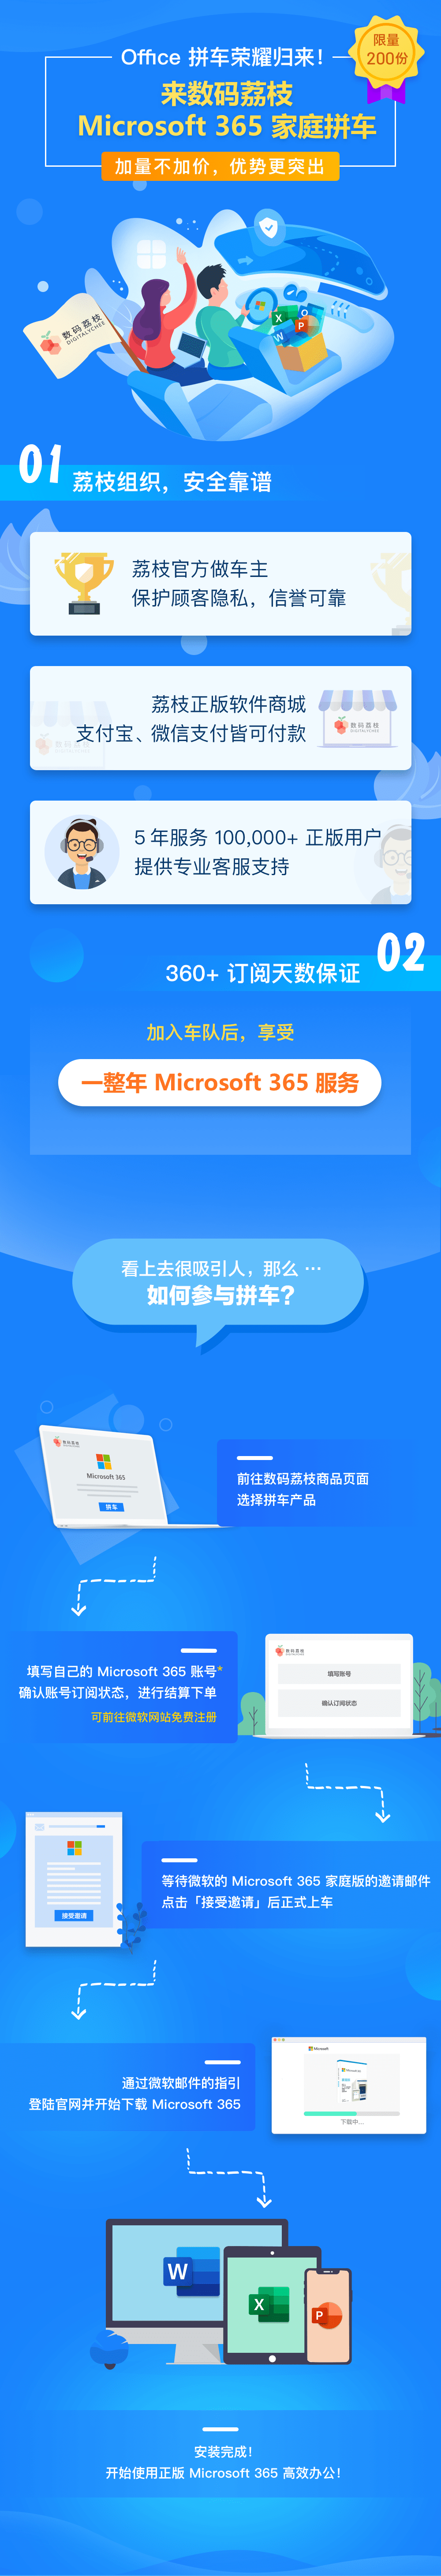 Office 365 官方订阅一年拼团 89.9 元/年 - 果核剥壳